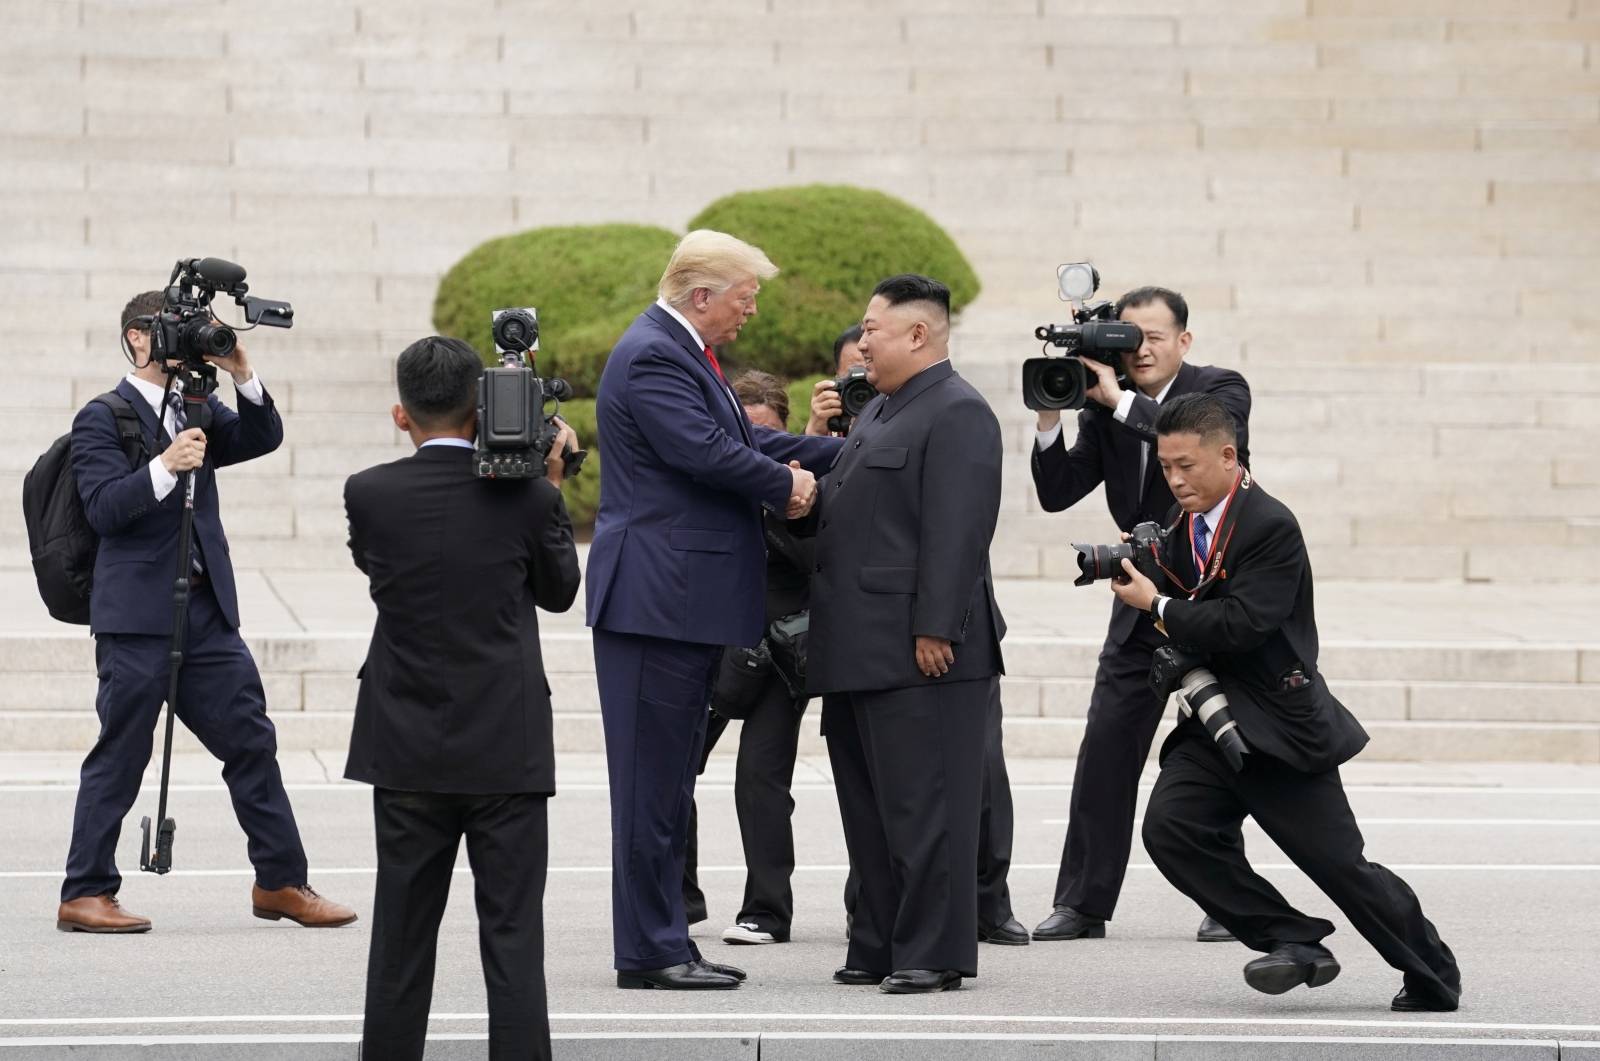 U.S. President Trump and North Korean leader Kim Jong Un meet at the Korean Demilitarized Zone